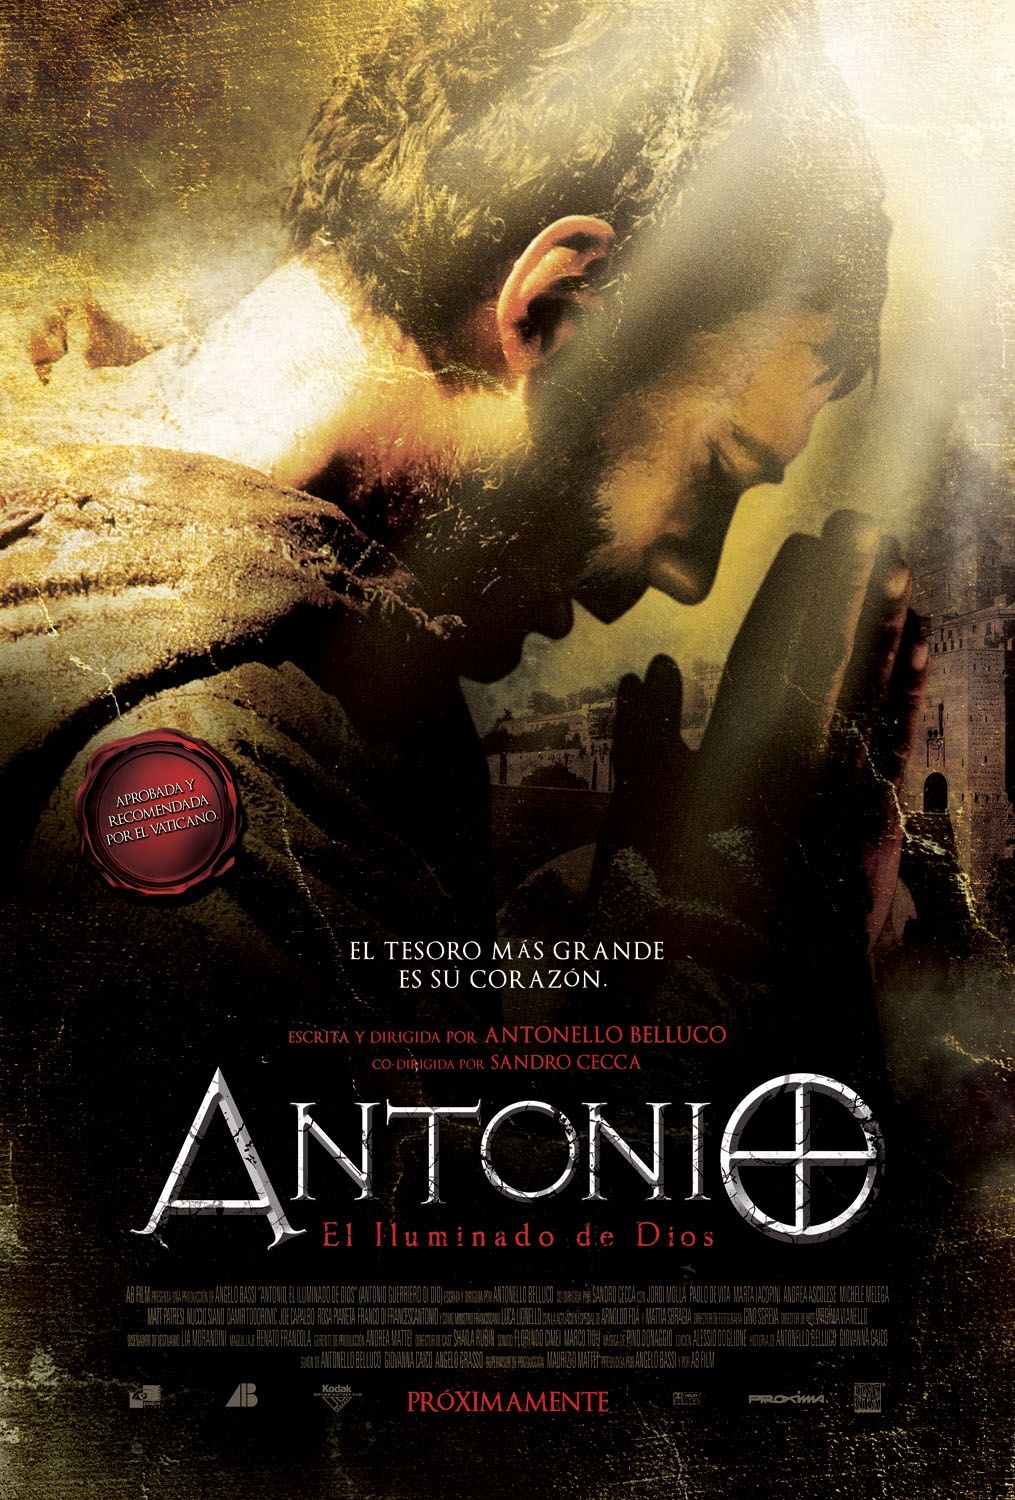 Extra Large Movie Poster Image for Antonio guerriero di Dio 